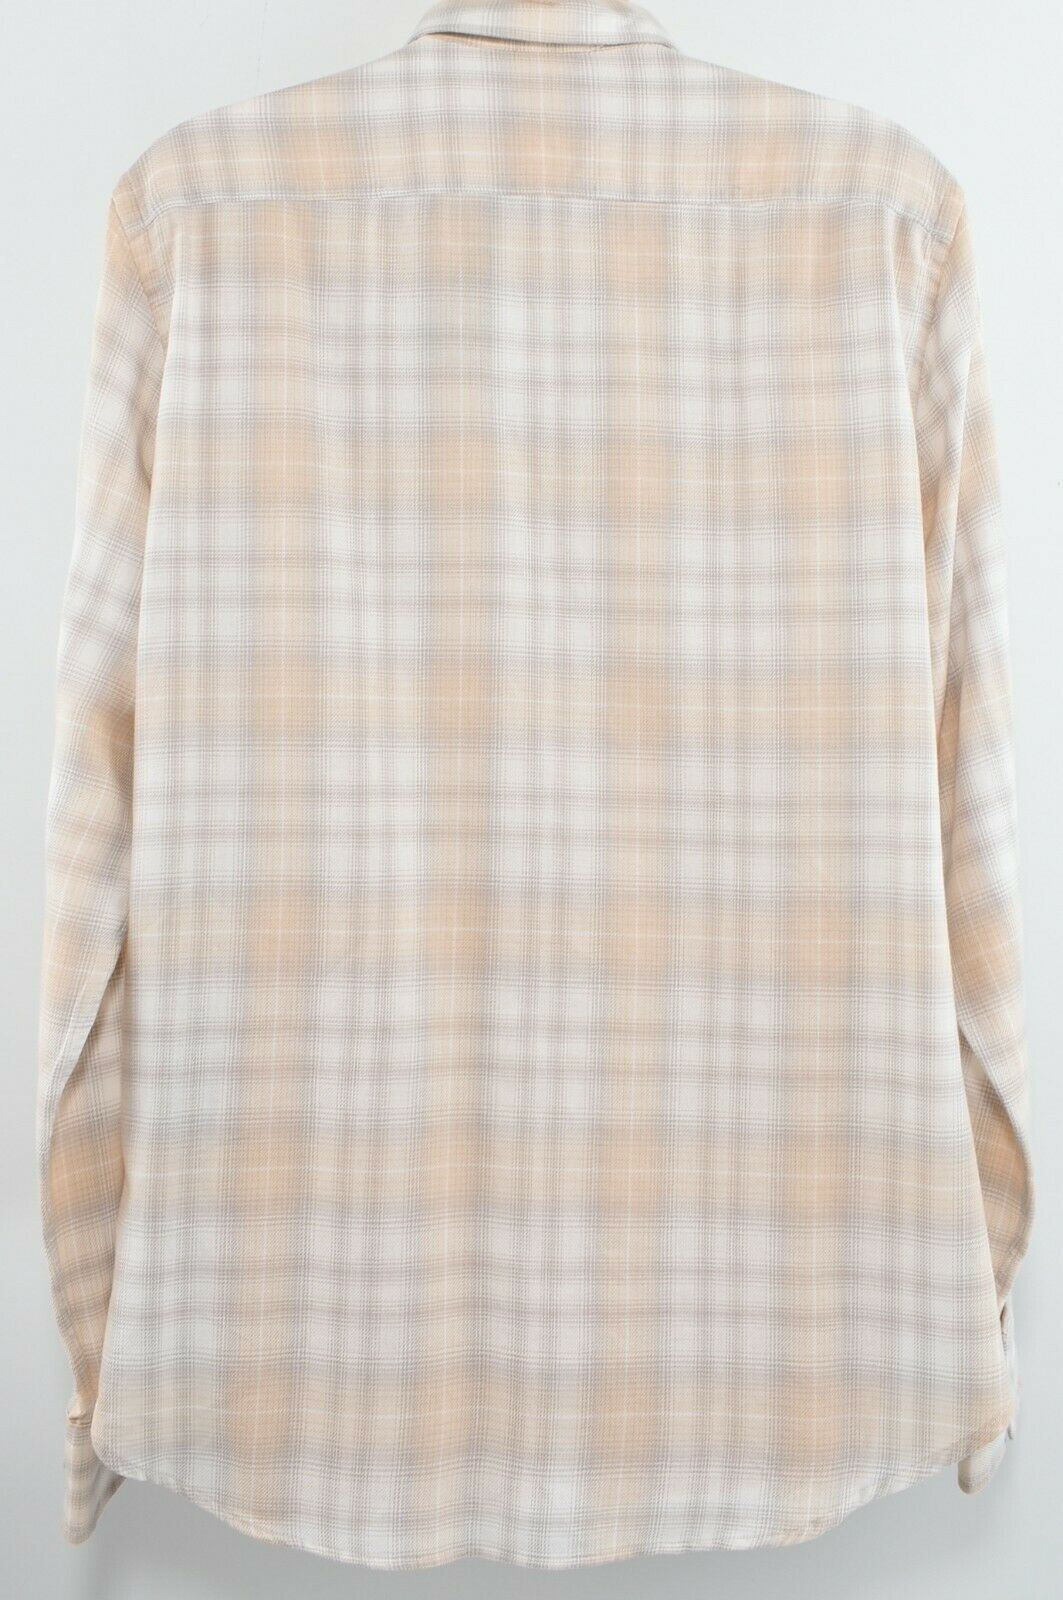 POLO RALPH LAUREN Women's Beige/Grey Checked Cotton Shirt, size L (UK 14)